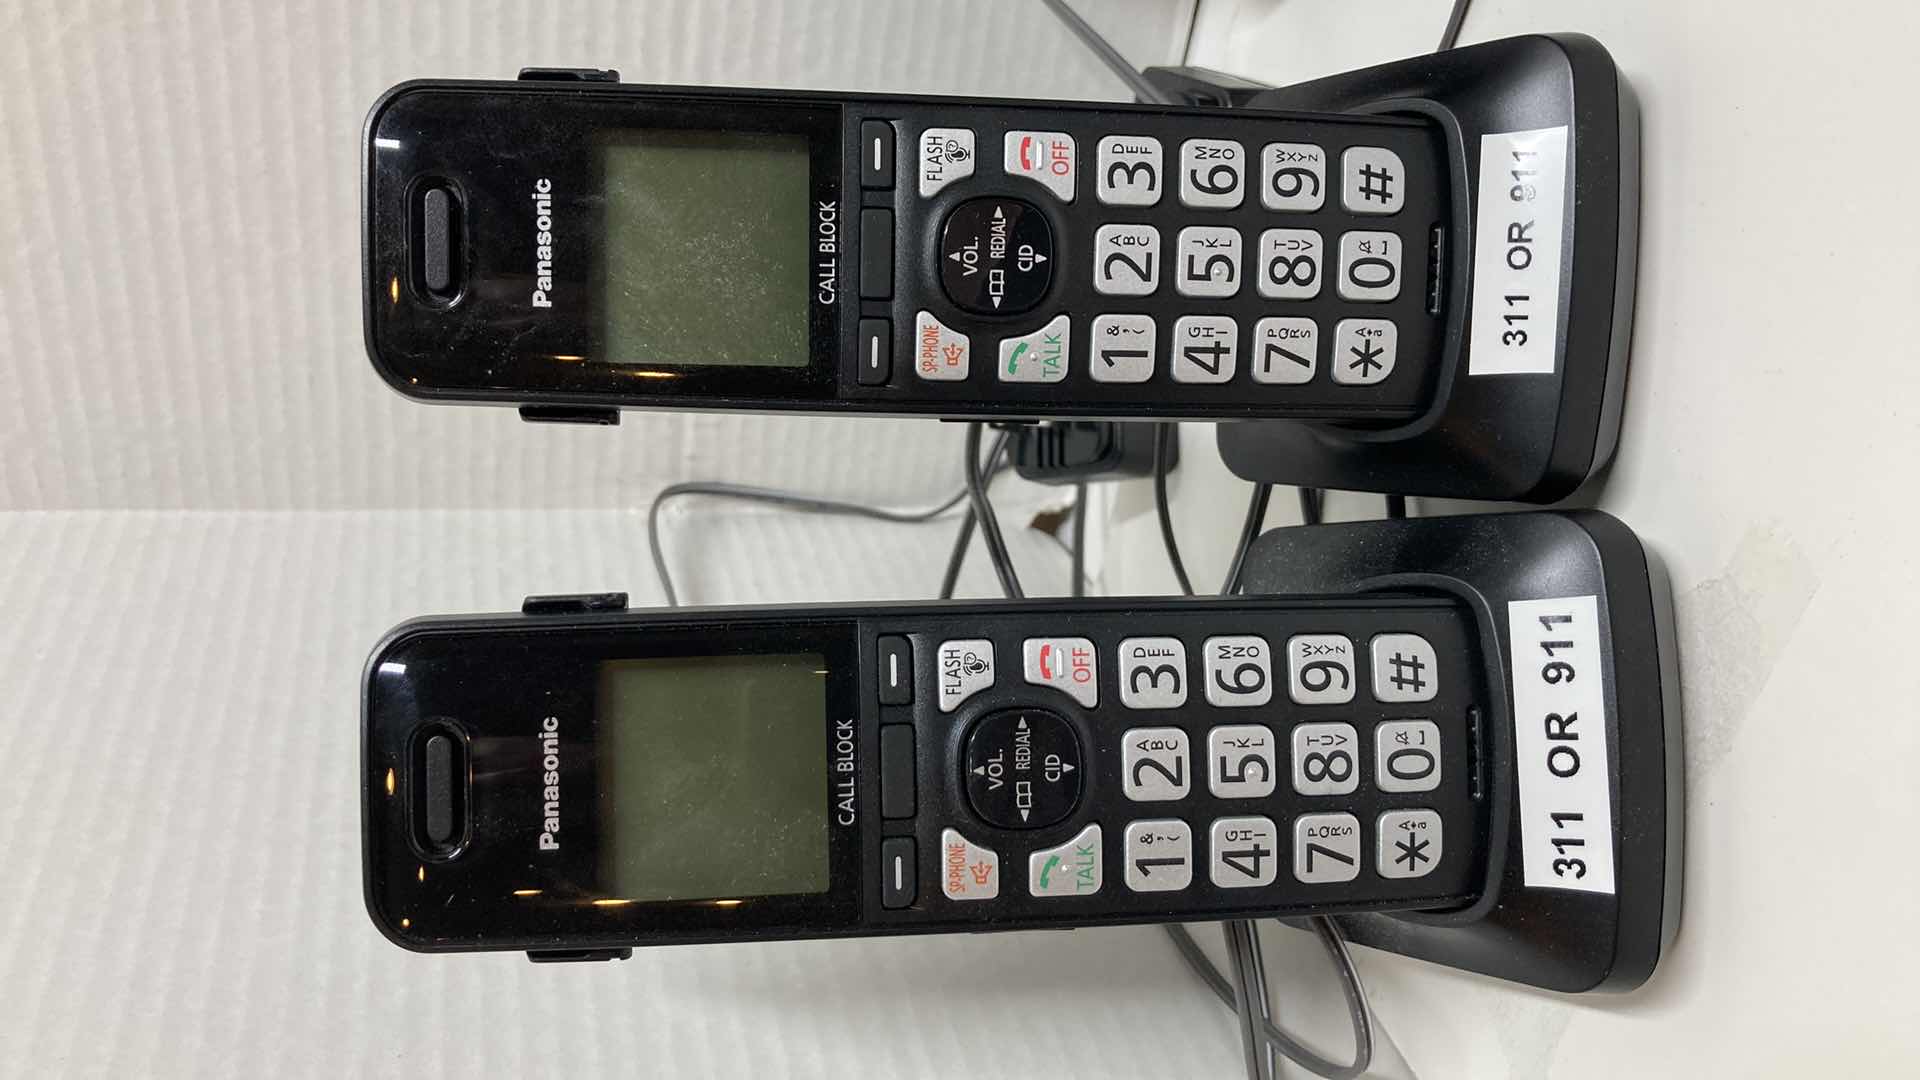 Photo 4 of PANASONIC CORDLESS PHONE SYSTEM W 5 PHONES & ANSWERING MACHINE MODEL